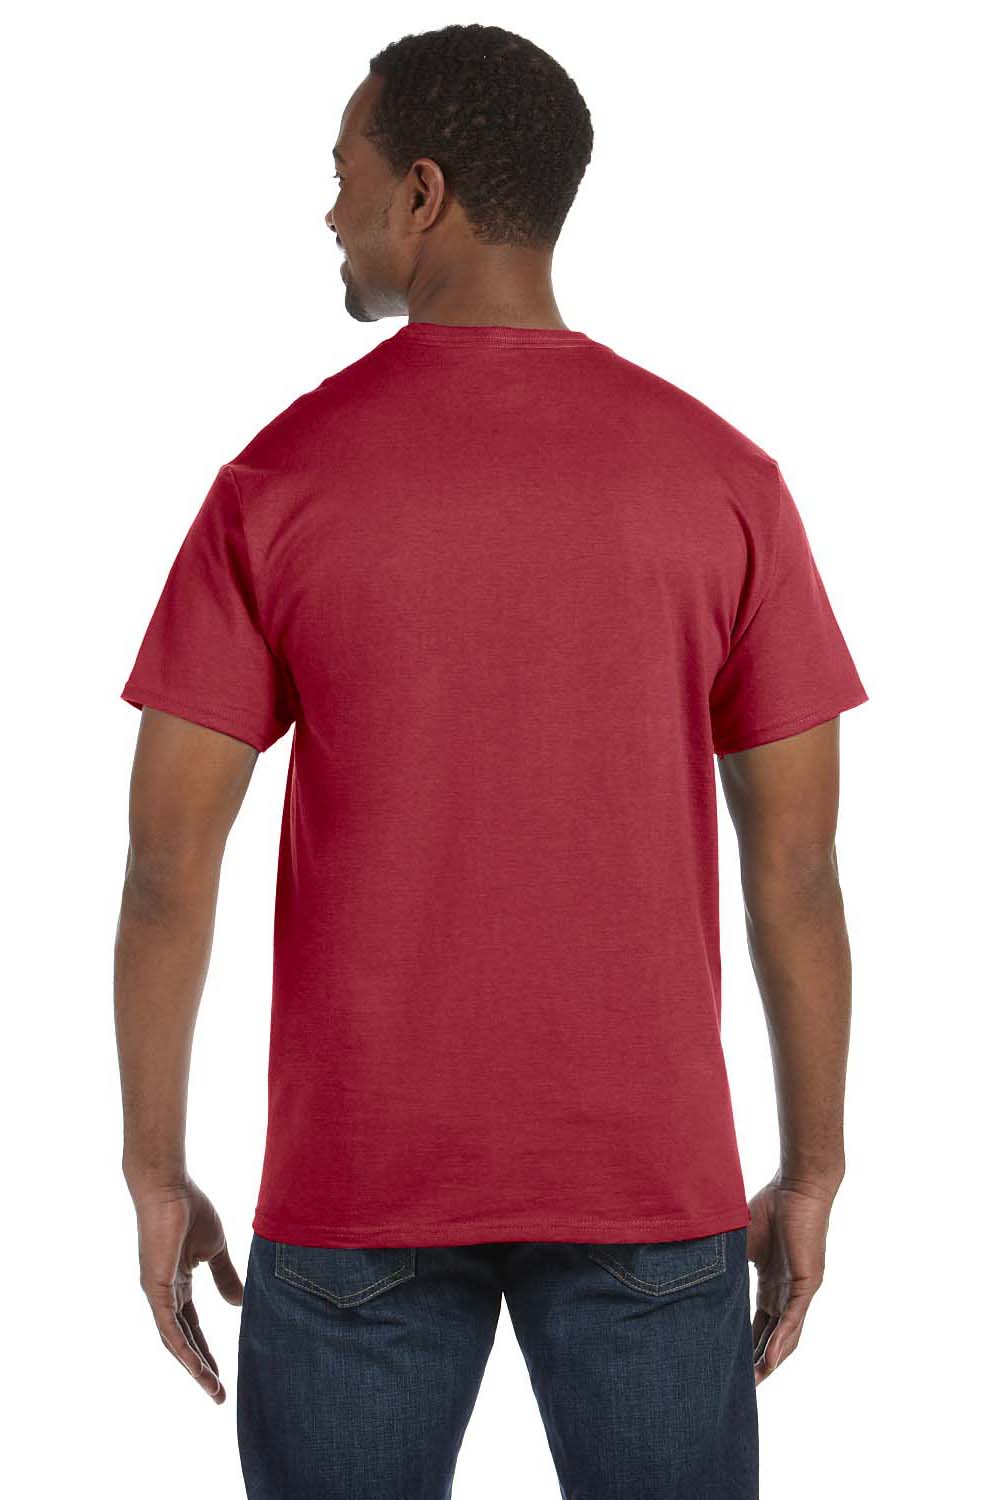 Jerzees 29M Mens Dri-Power Moisture Wicking Short Sleeve Crewneck T-Shirt Crimson Red Back